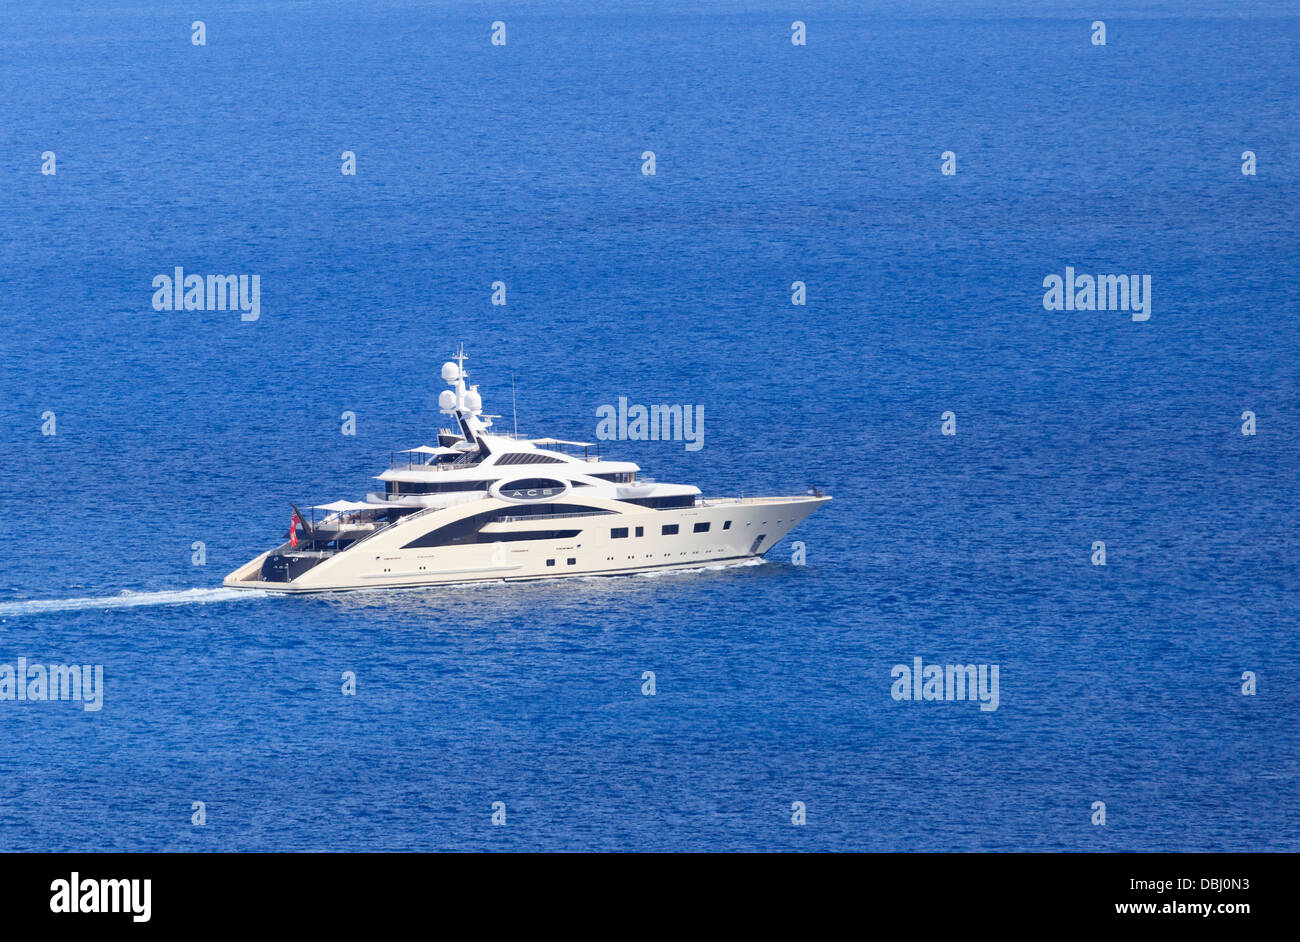 The Ace megayacht designed by Lurssen Yachts off the coast of Corfu Stock Photo